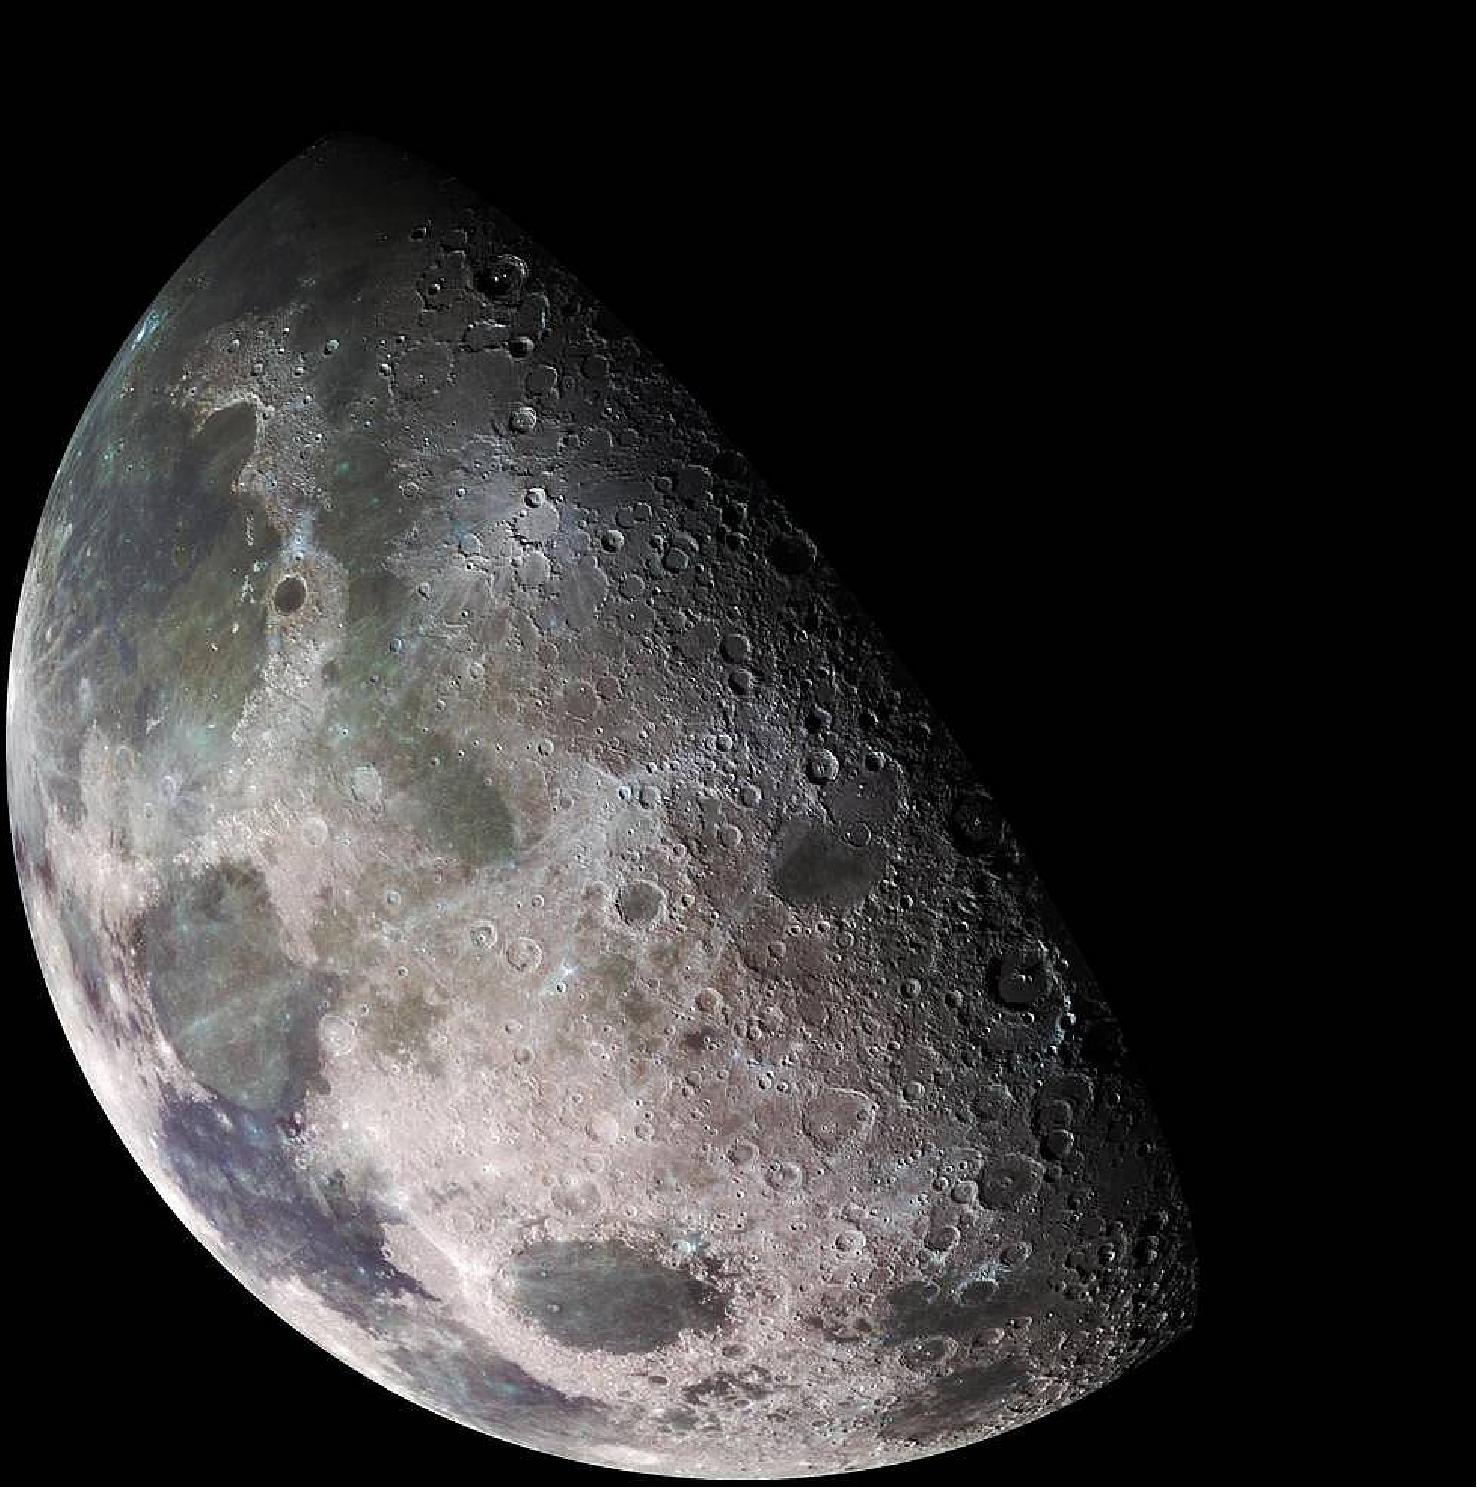 Figure 4: The Moon (image credit: NASA/JPL/USGS)